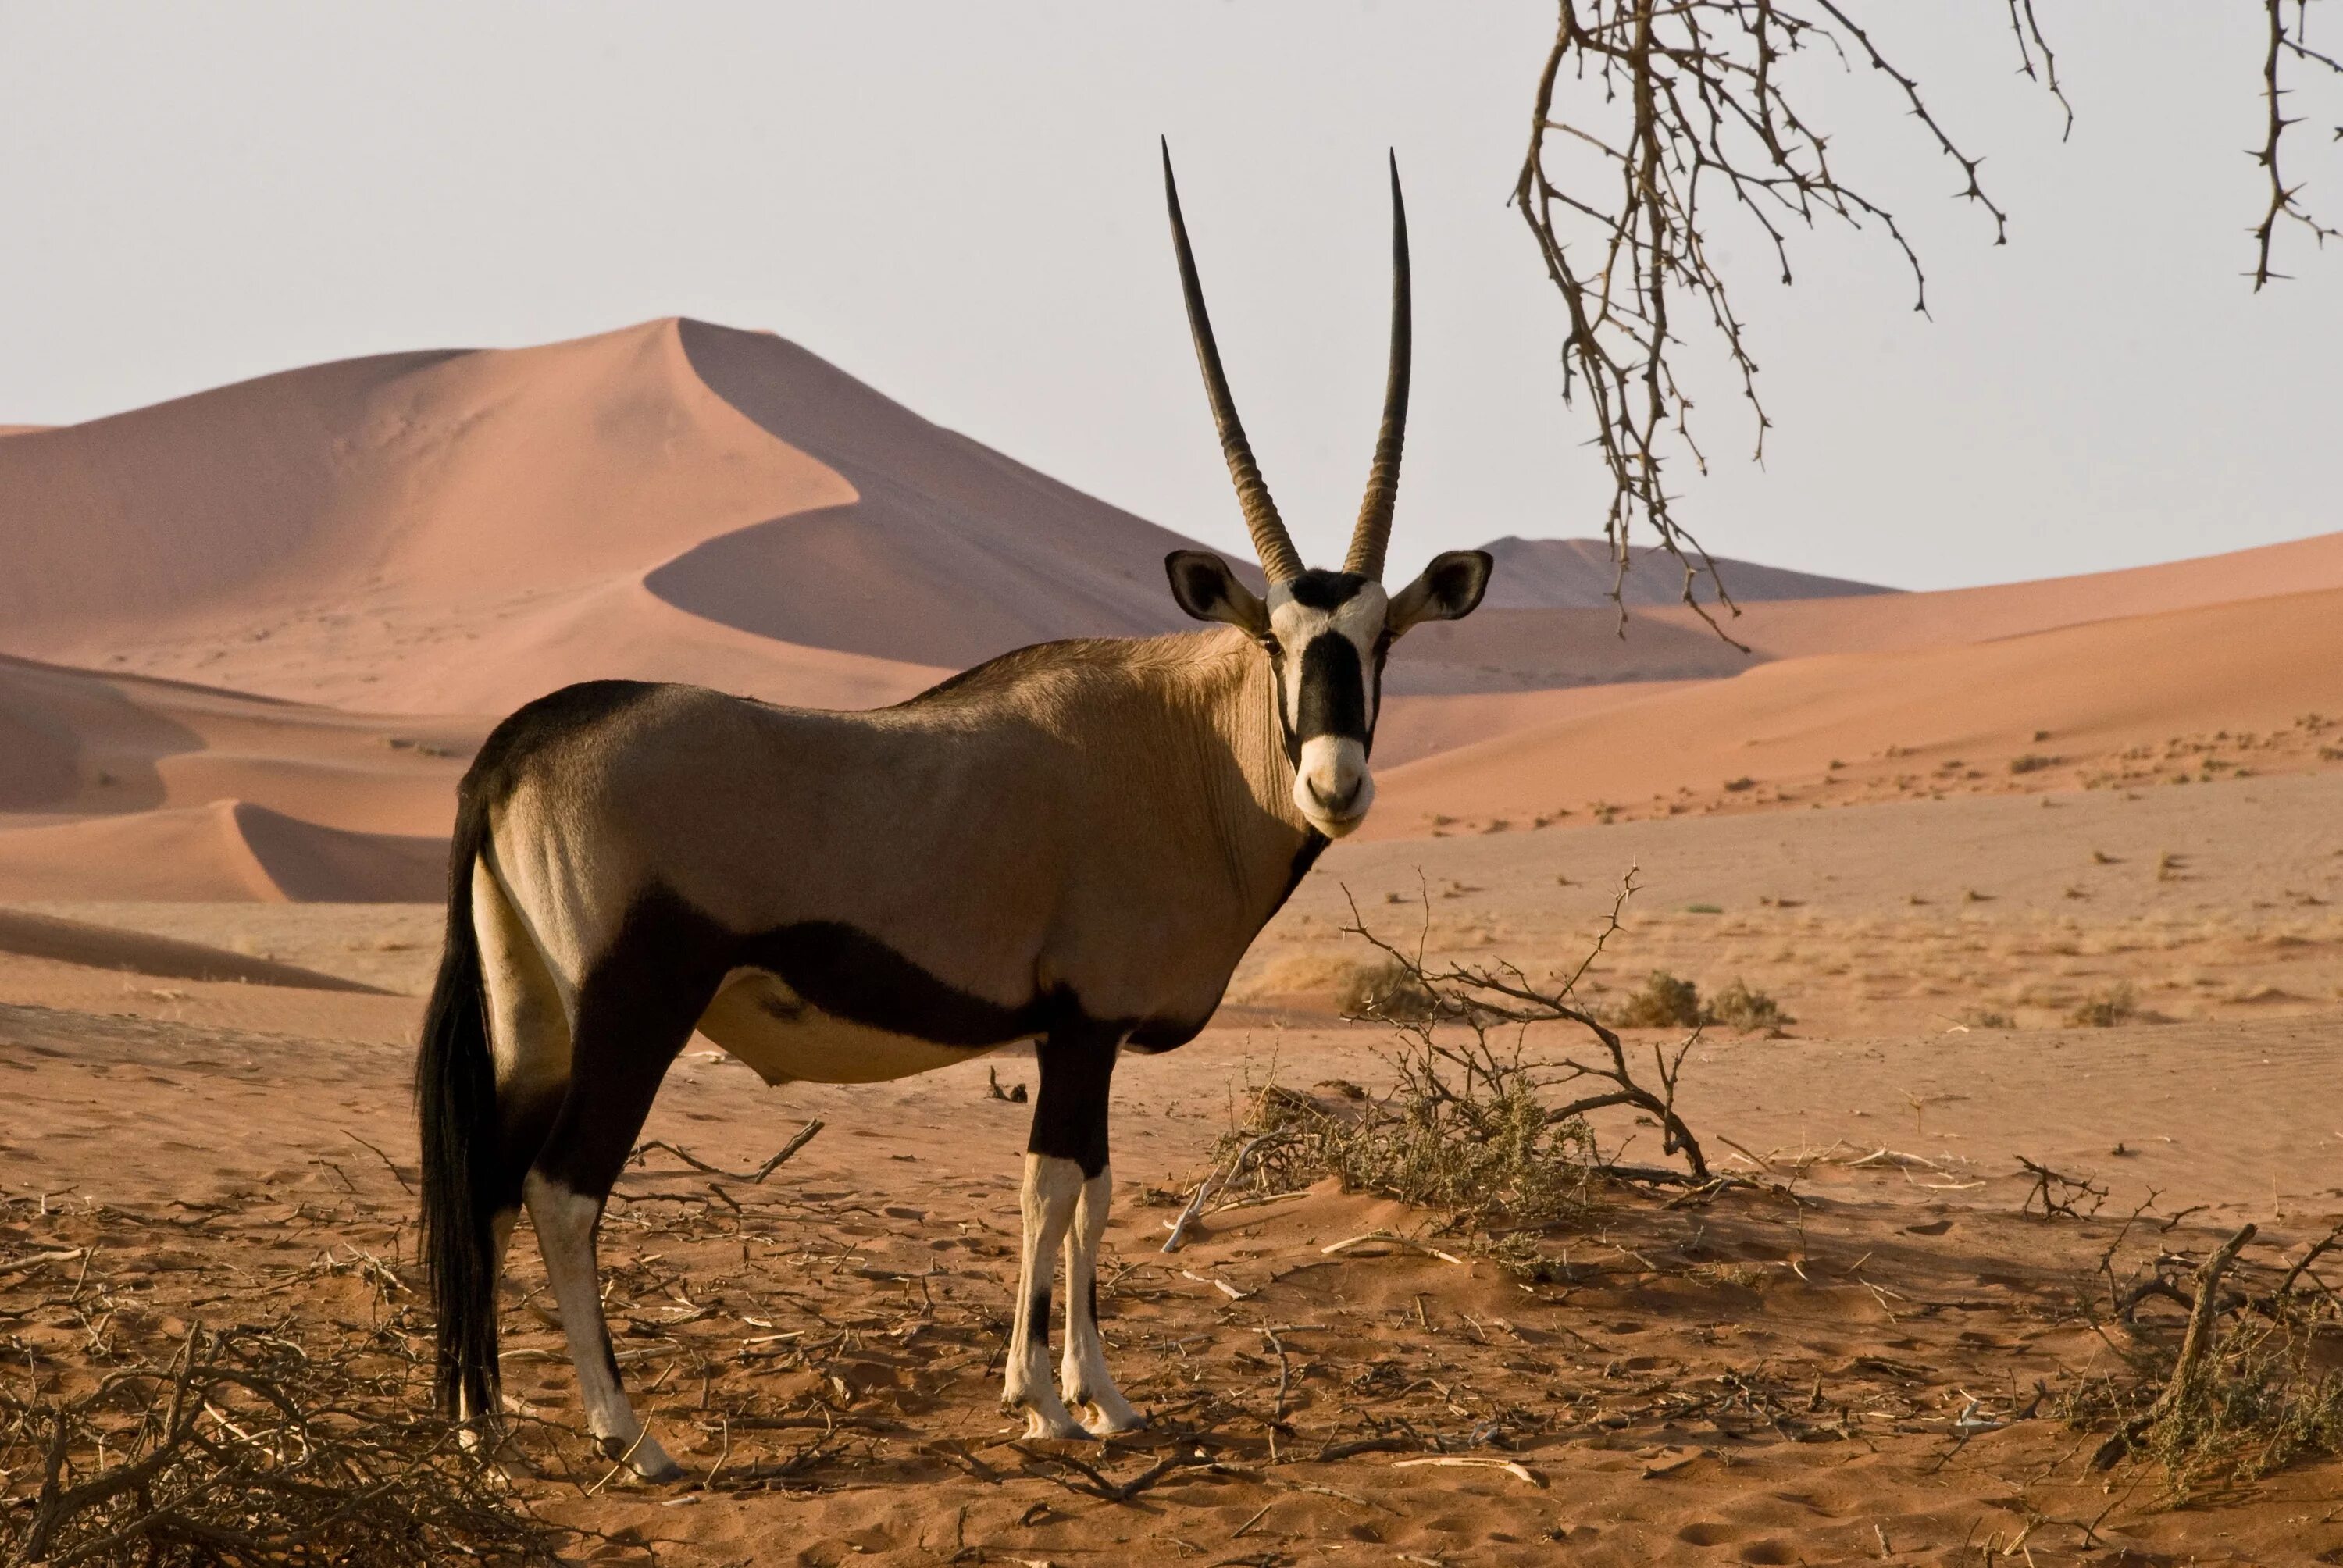 Антилопы пустыни Намиб. Животный мир пустыни Намиб. Пустыни и полупустыни Африки животные. Африка пустыня Намиб фауна.